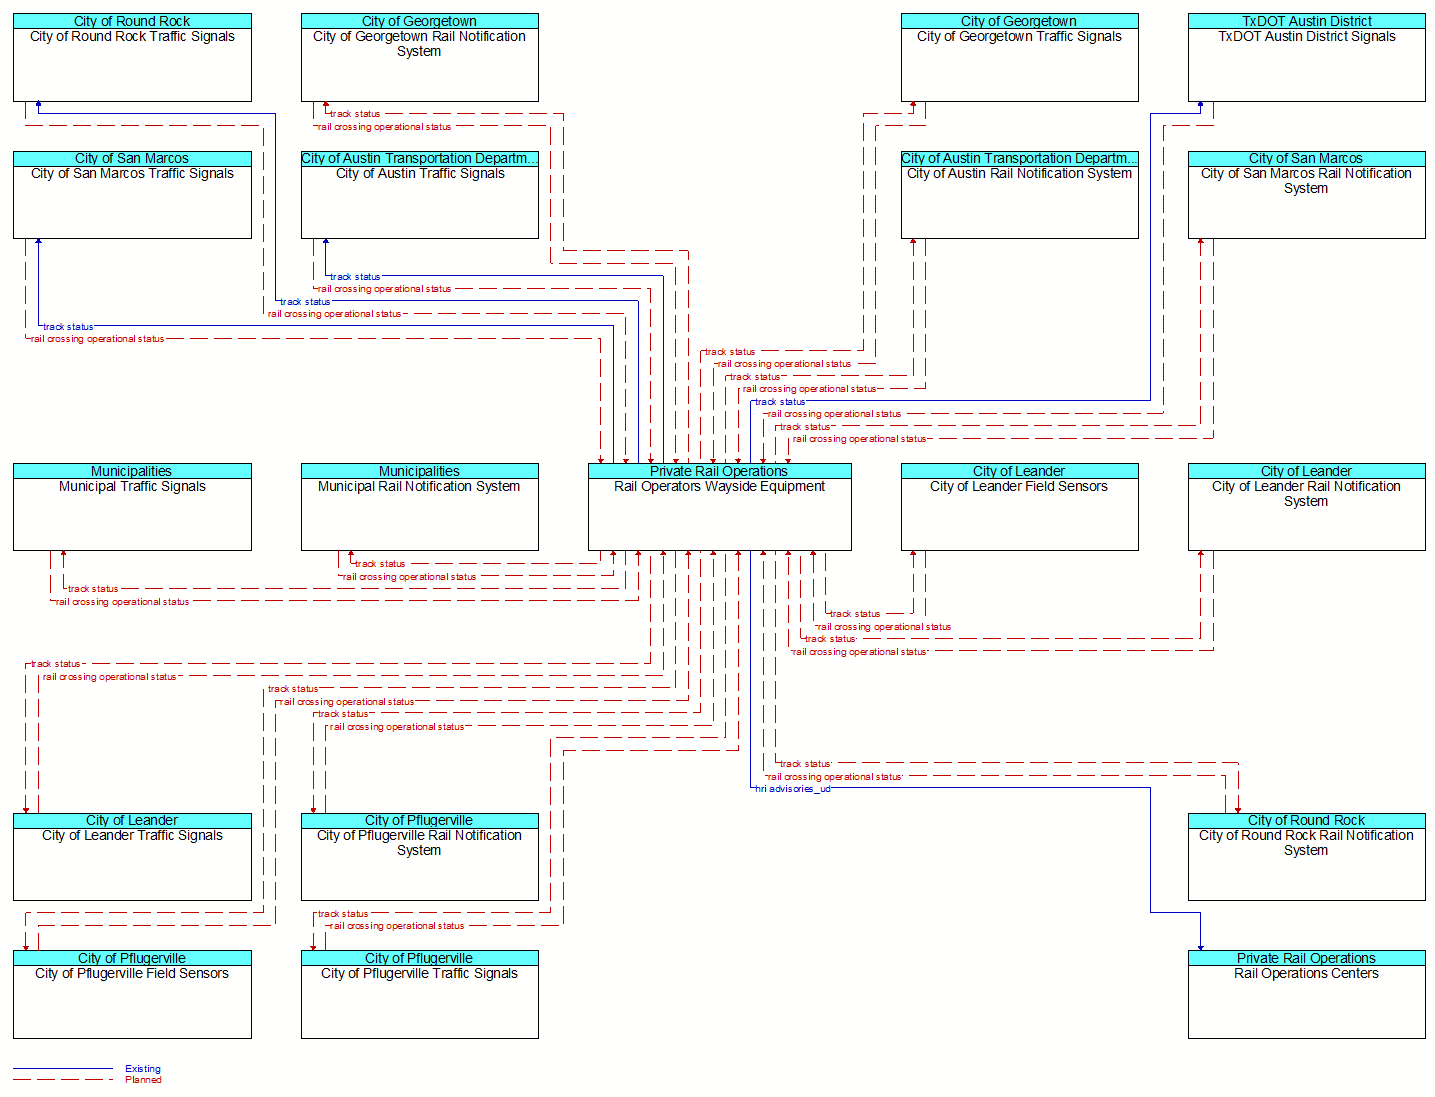 Context Diagram - Rail Operators Wayside Equipment